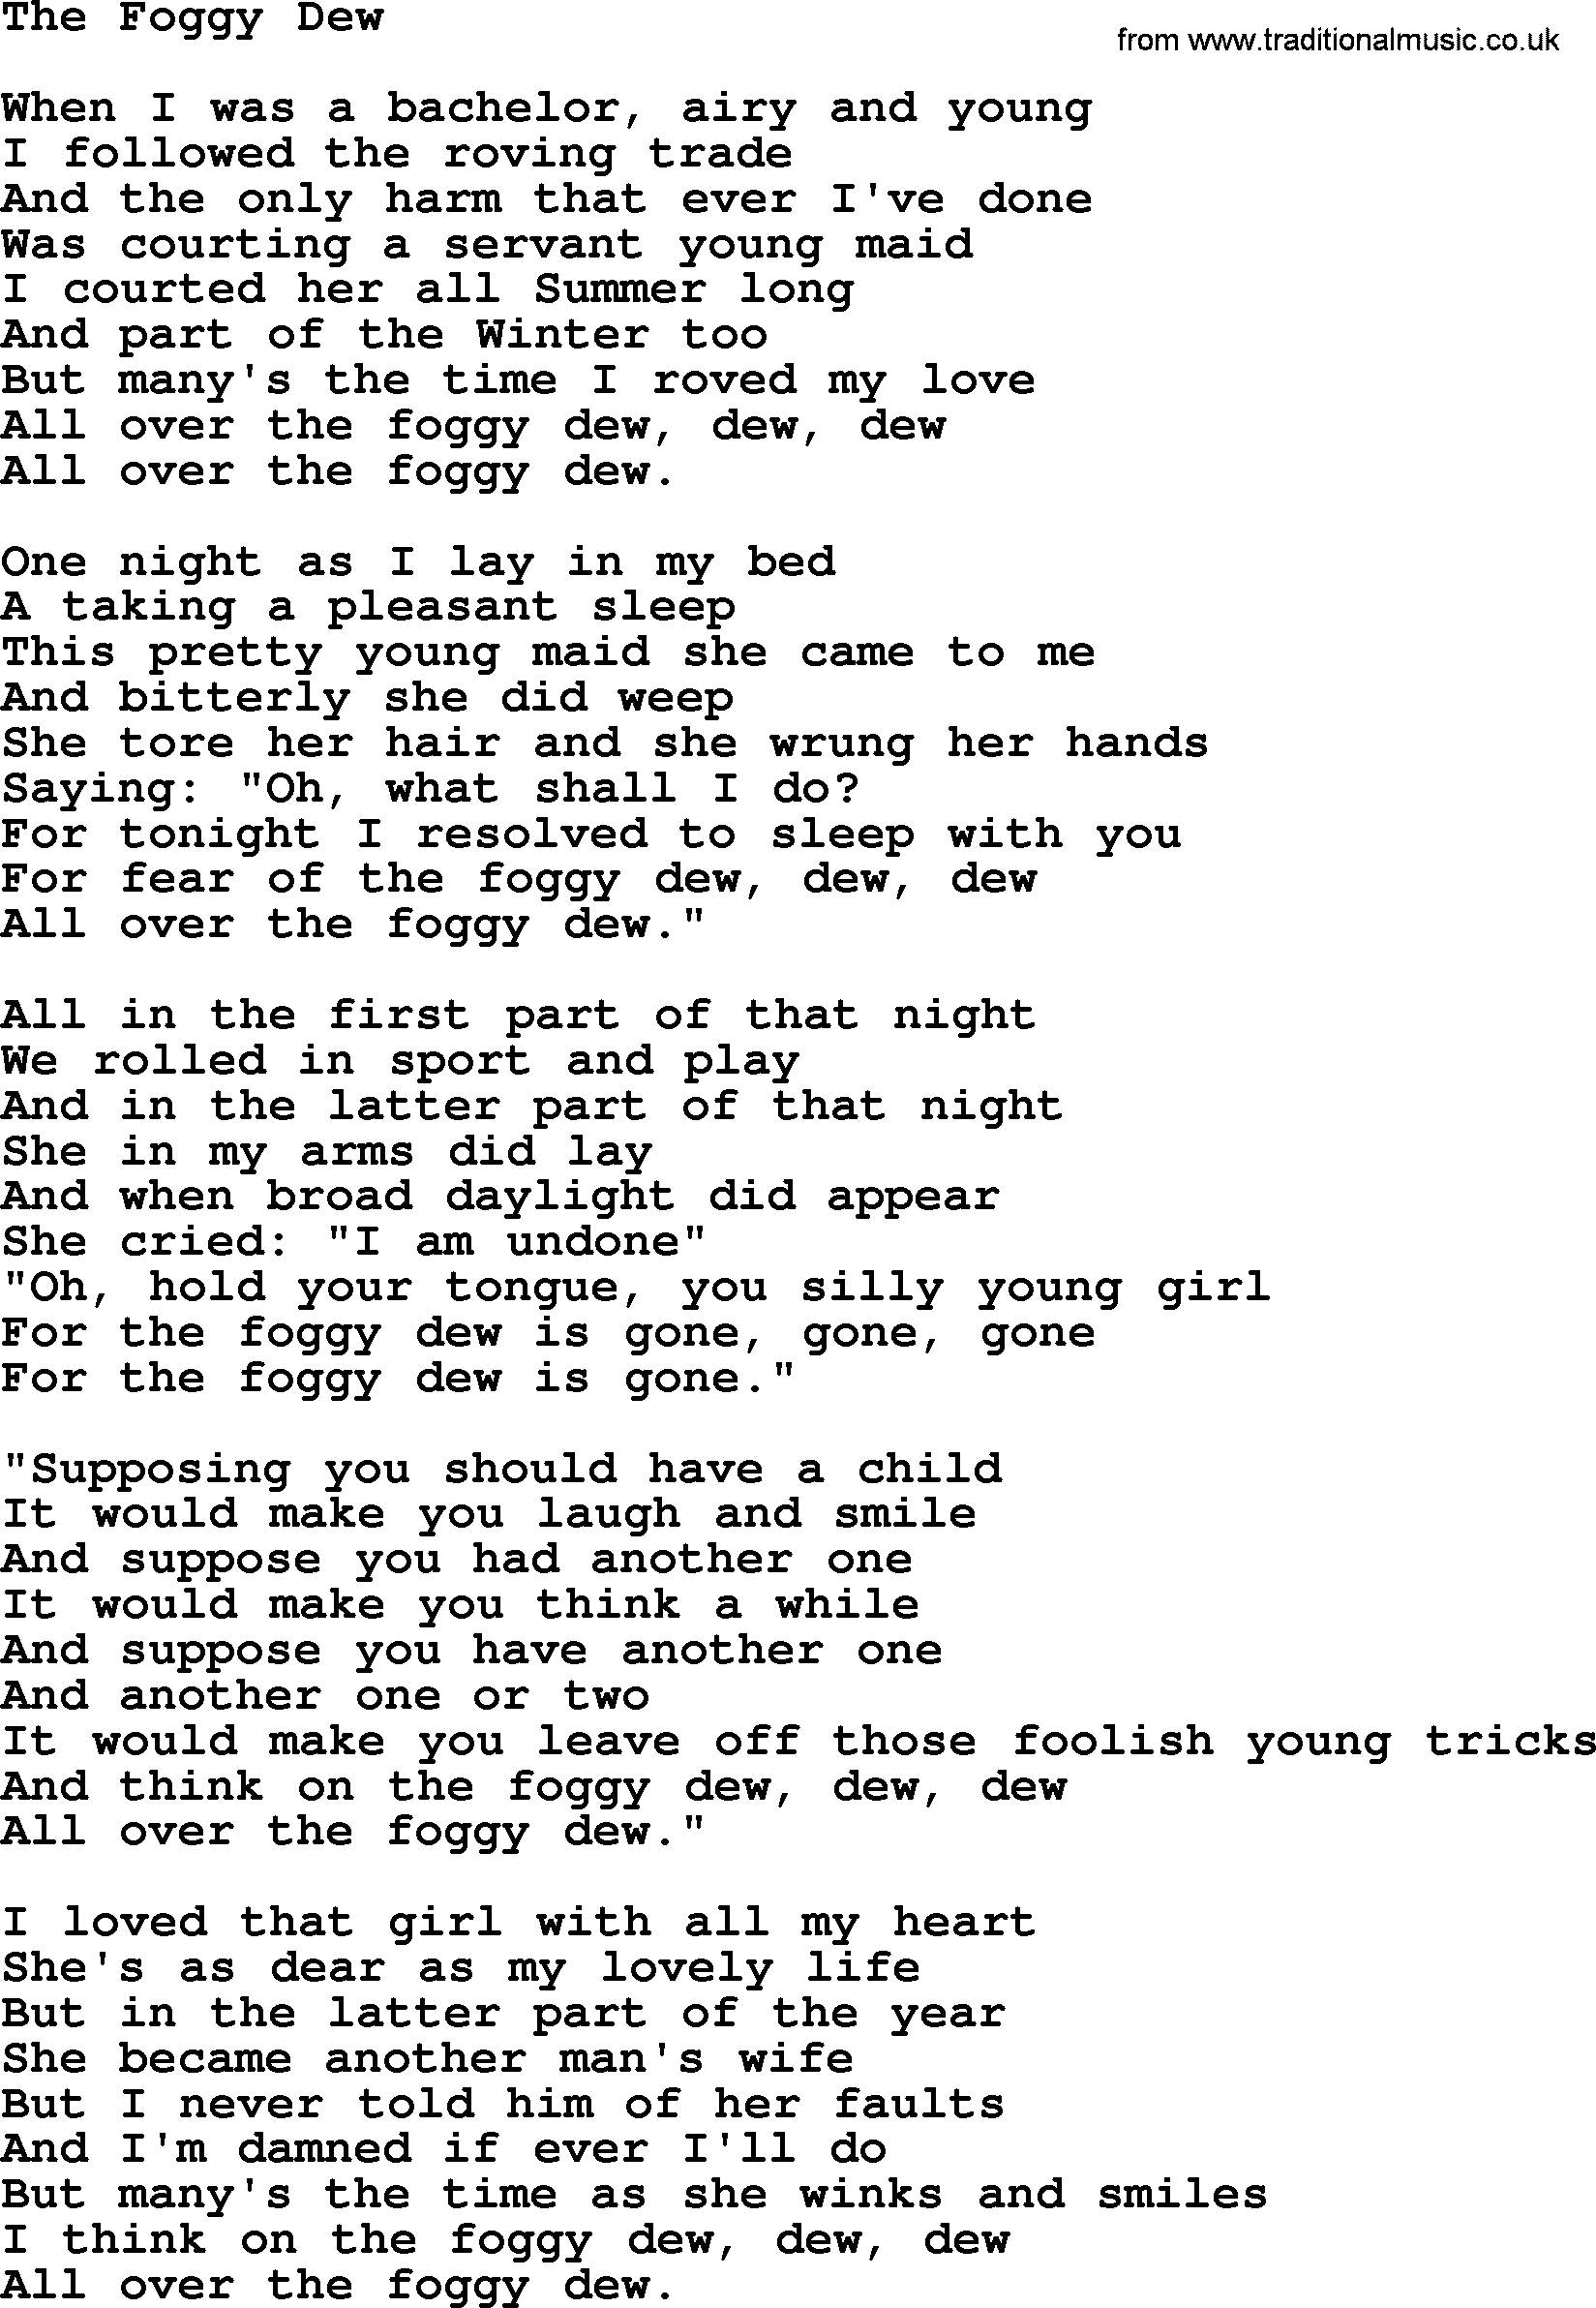 The Dubliners song: The Foggy Dew, lyrics